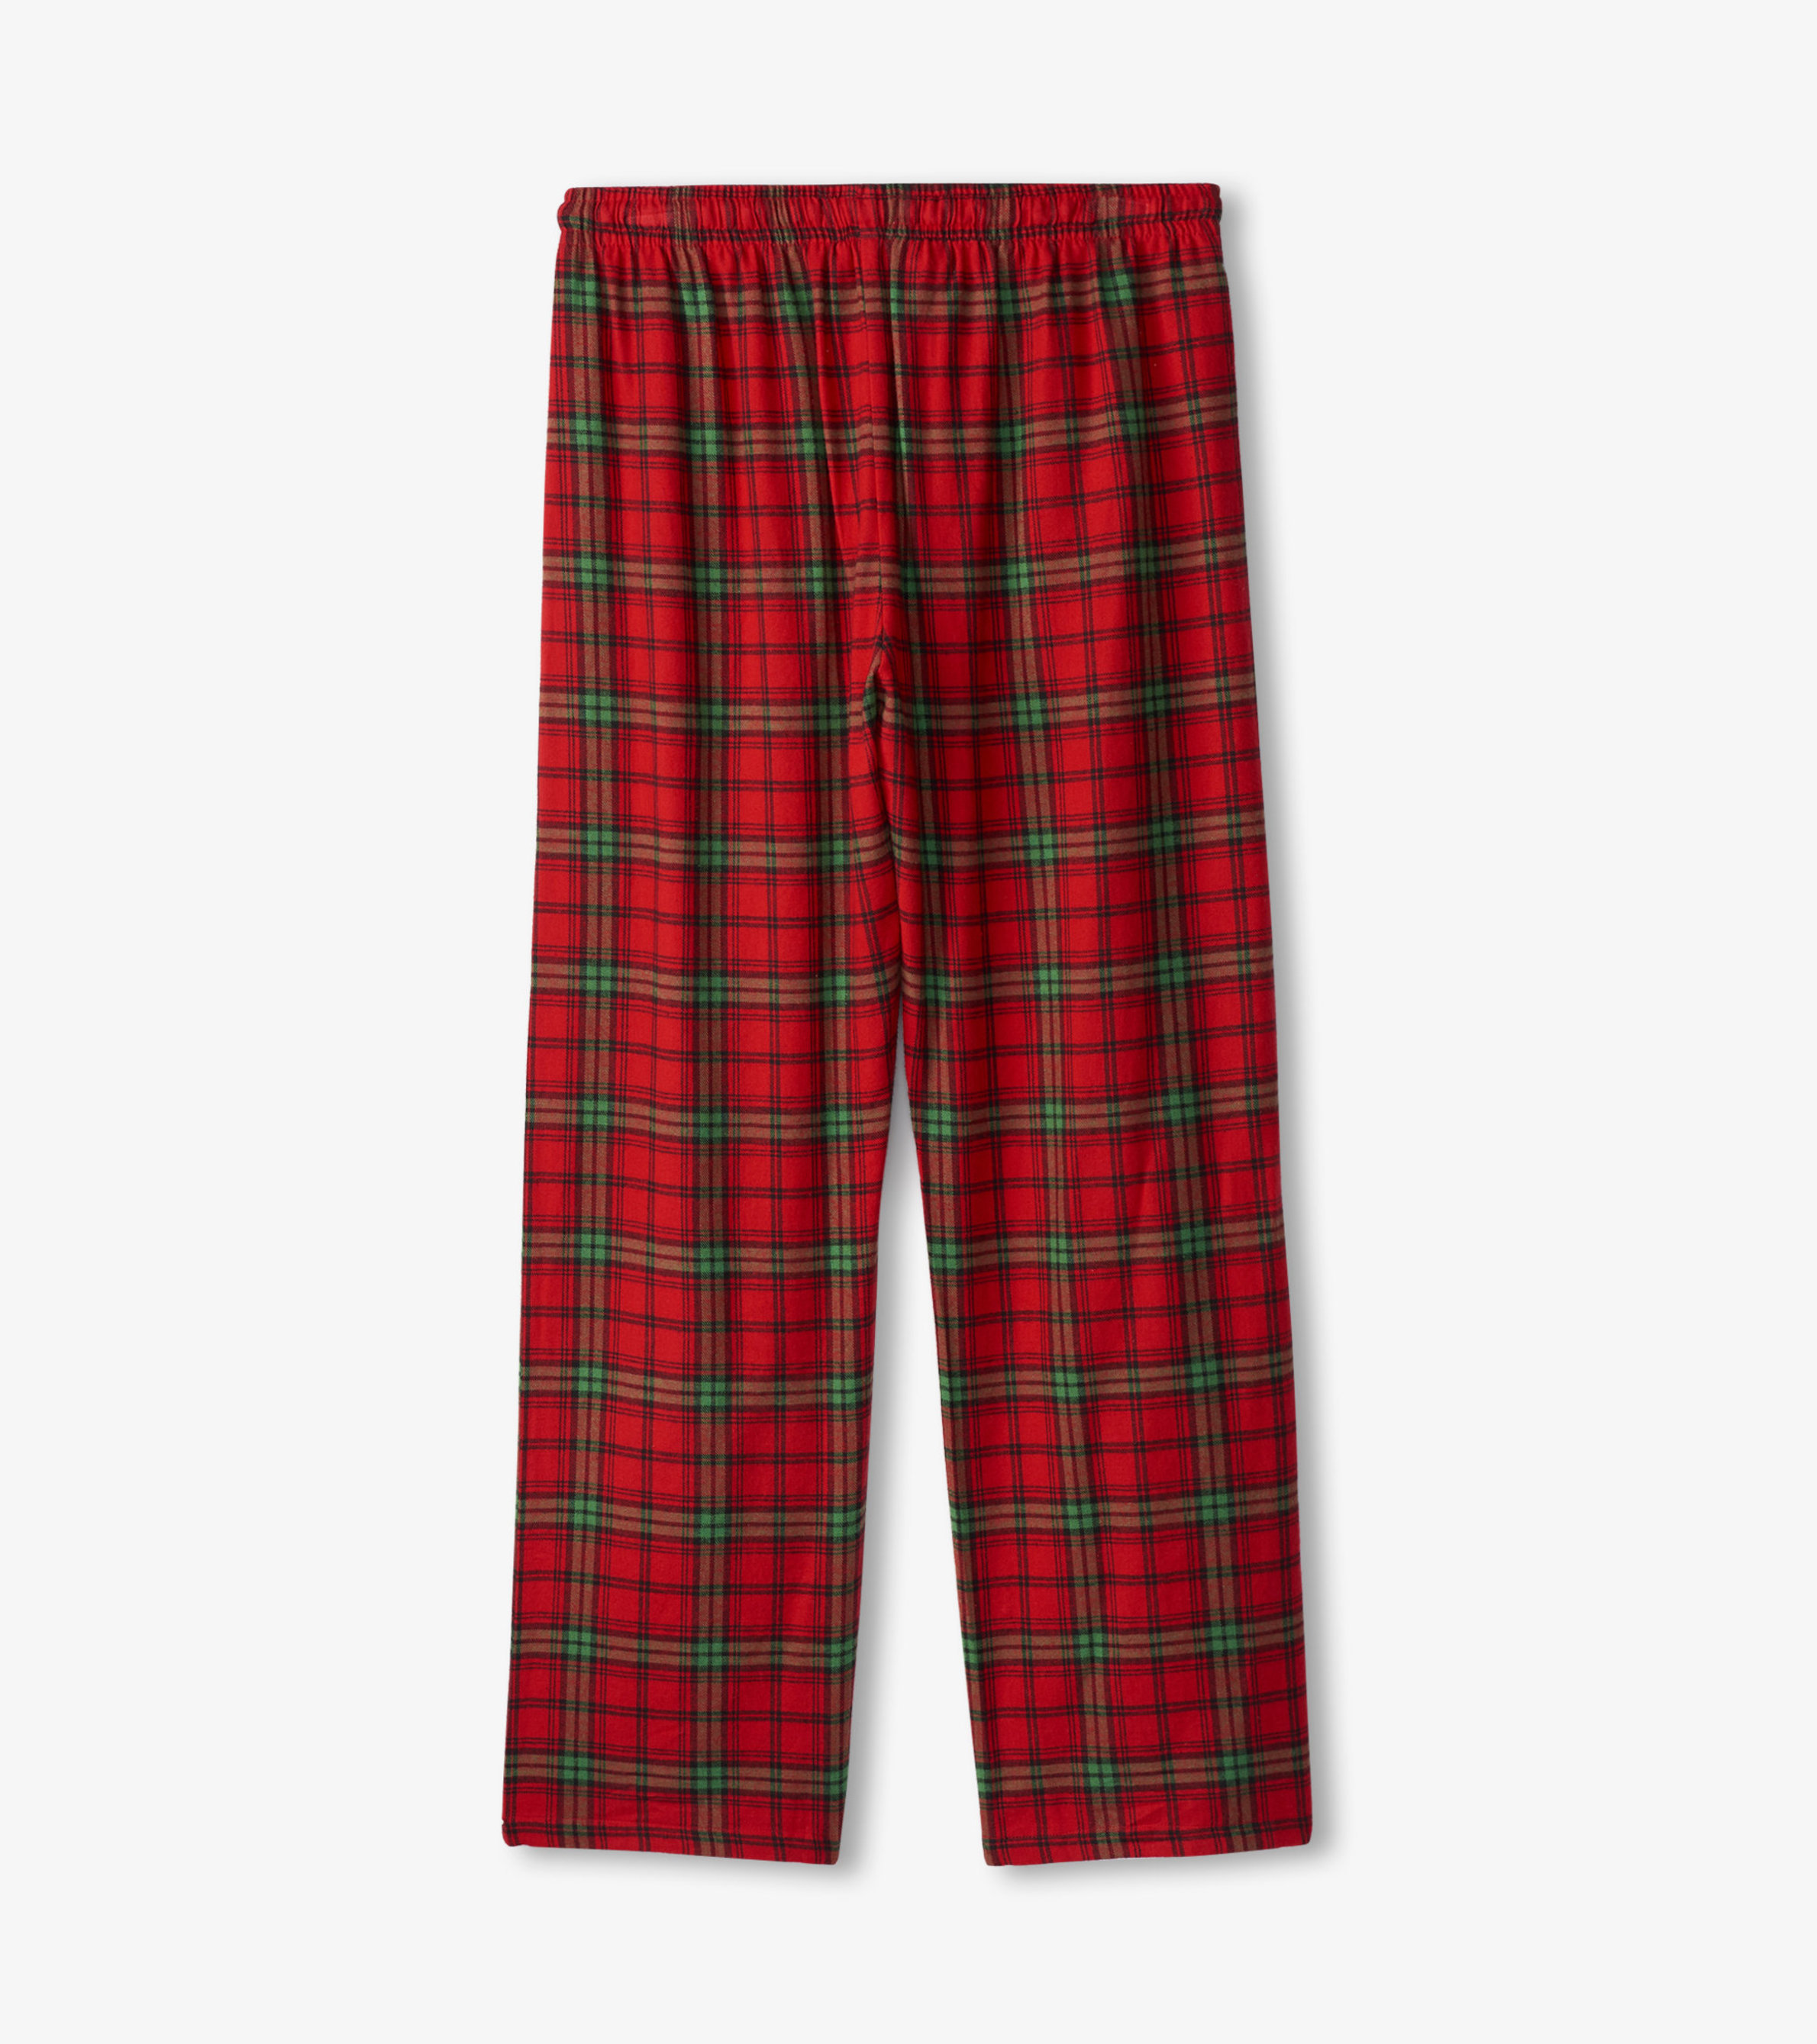 RK Classical Sleepwear Men's 100% Cotton Flannel Pajama Pants